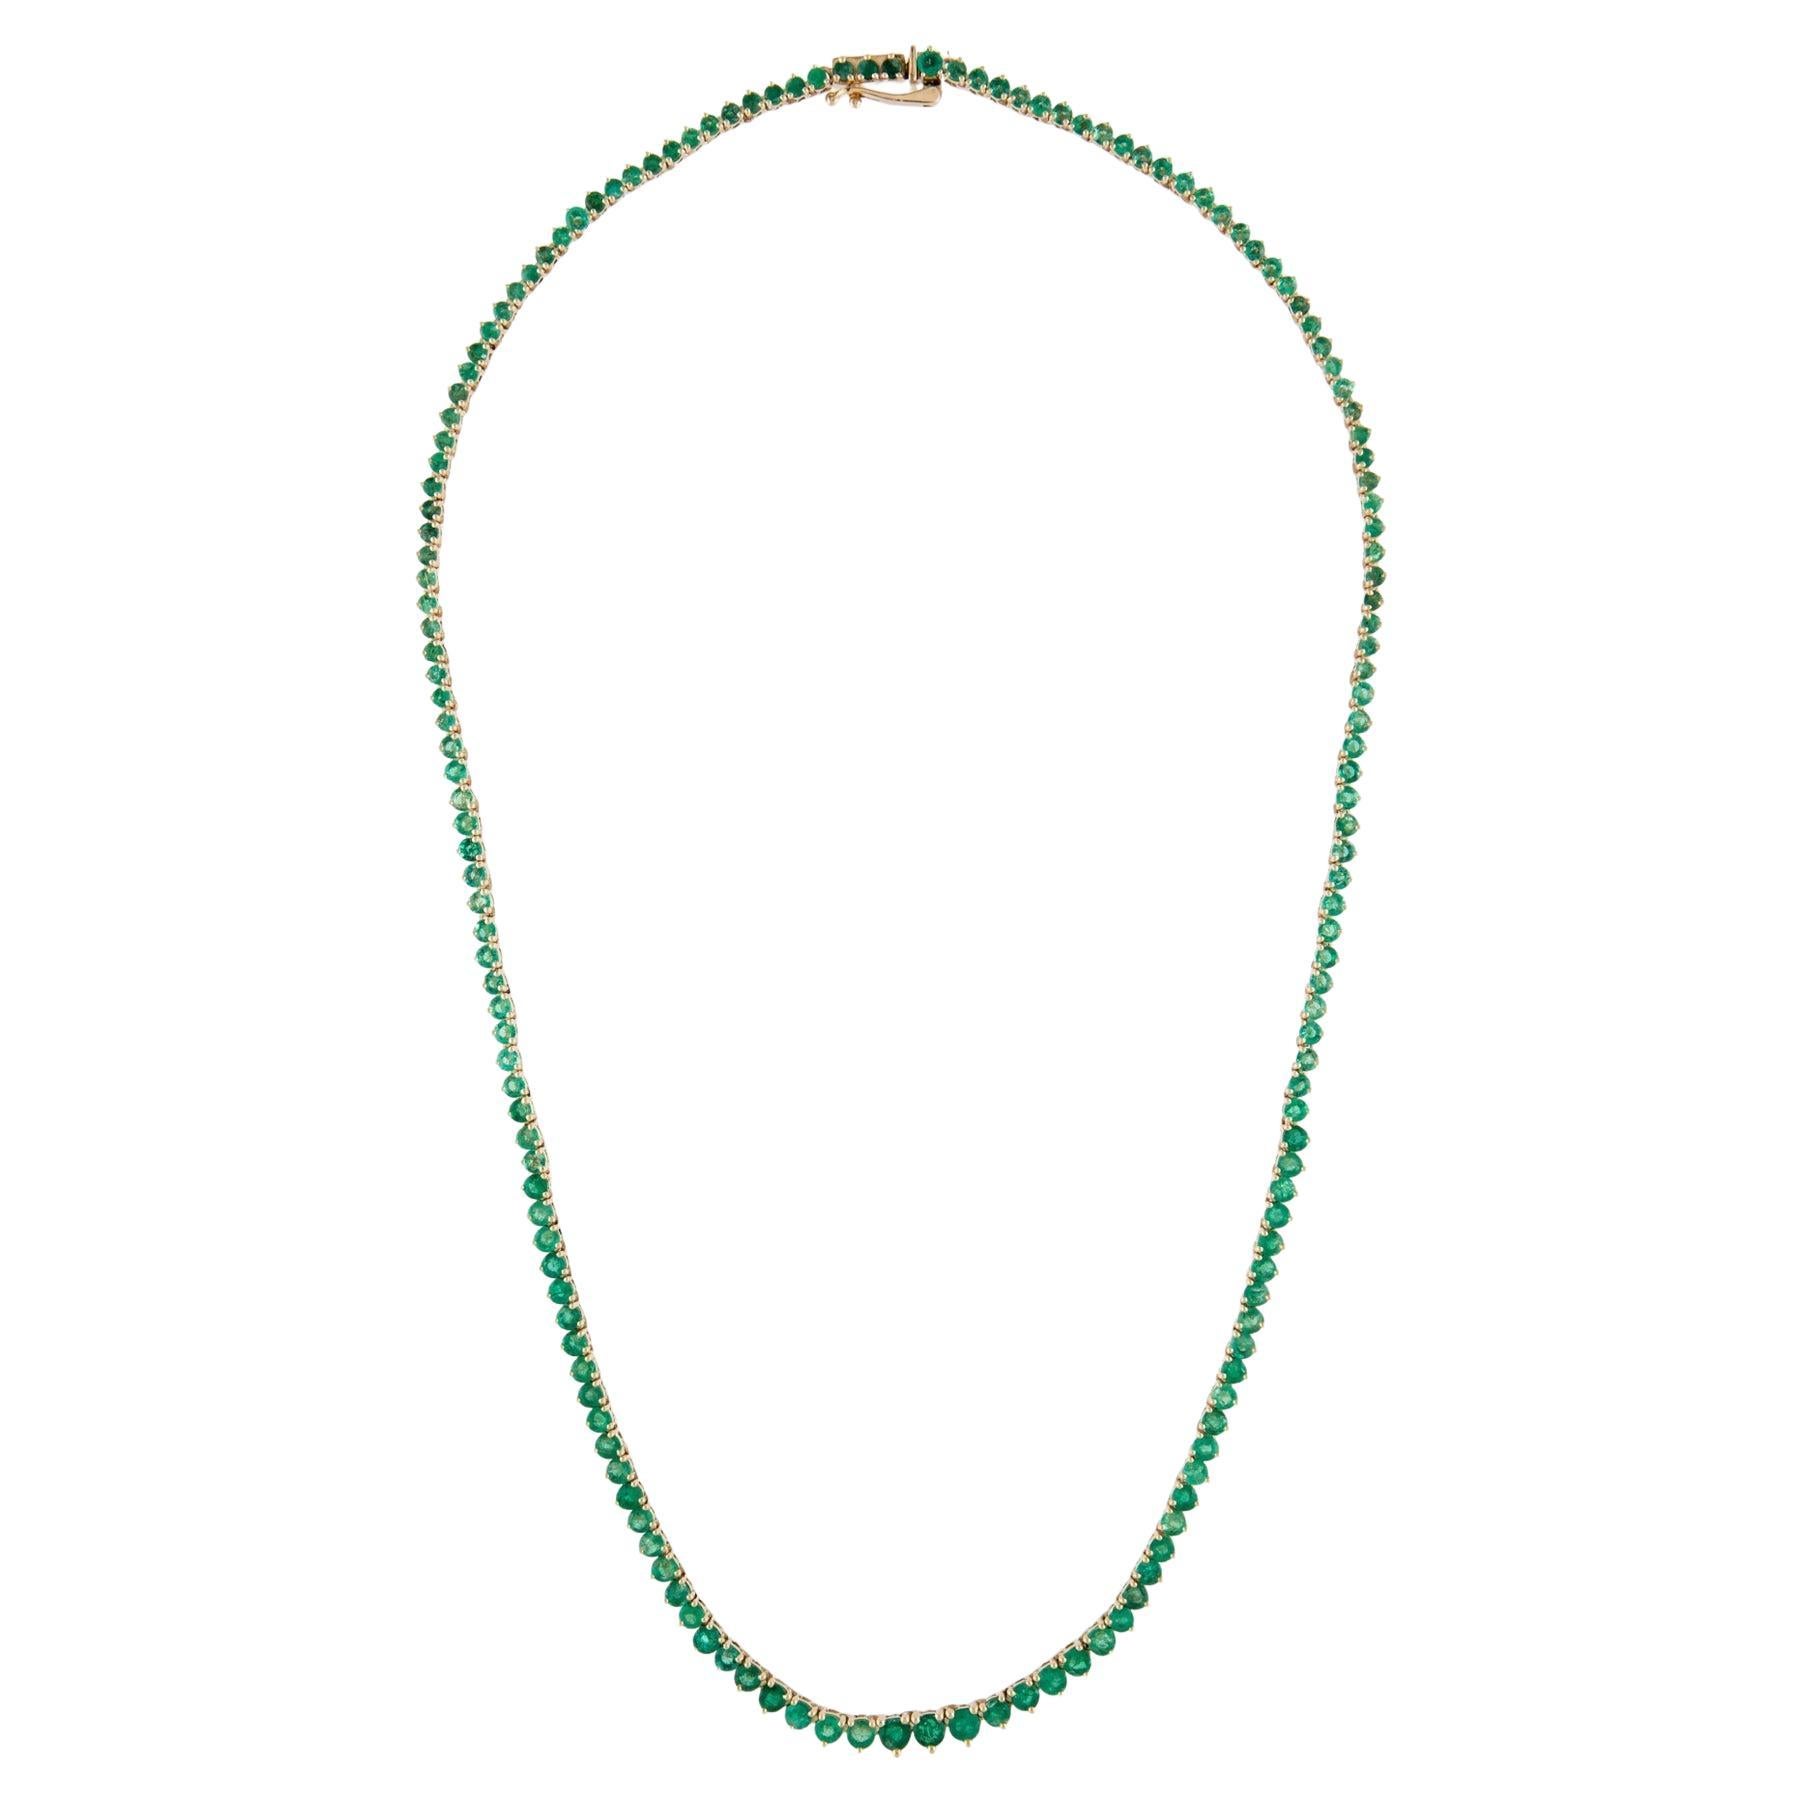 14K Emerald Graduated Necklace: Exquisite Luxury Statement Jewelry Piece